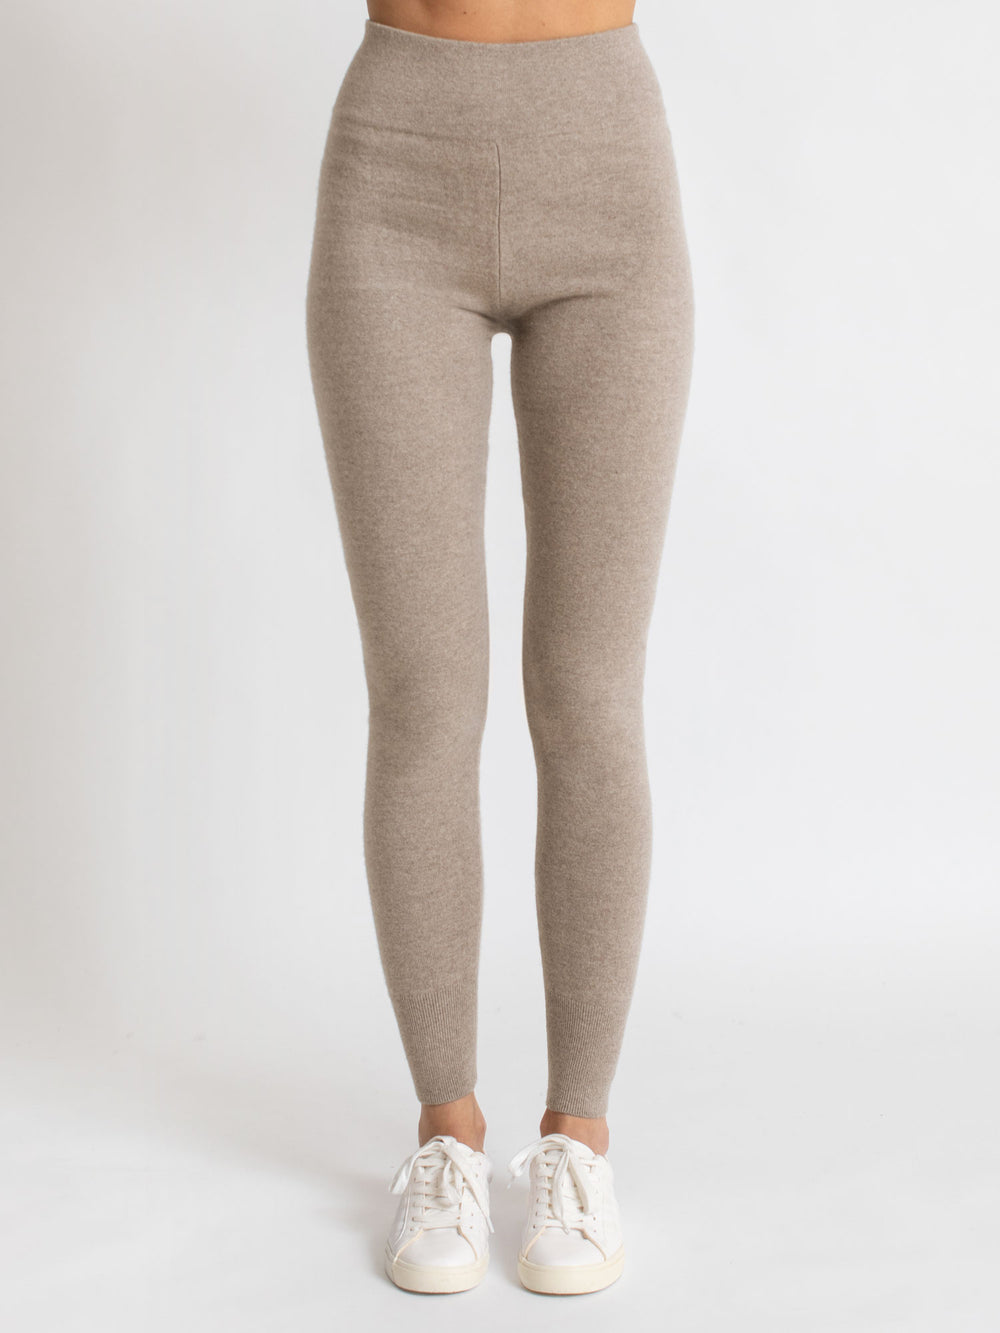 Cashmere pants Tights - light grey – Kashmina of Norway